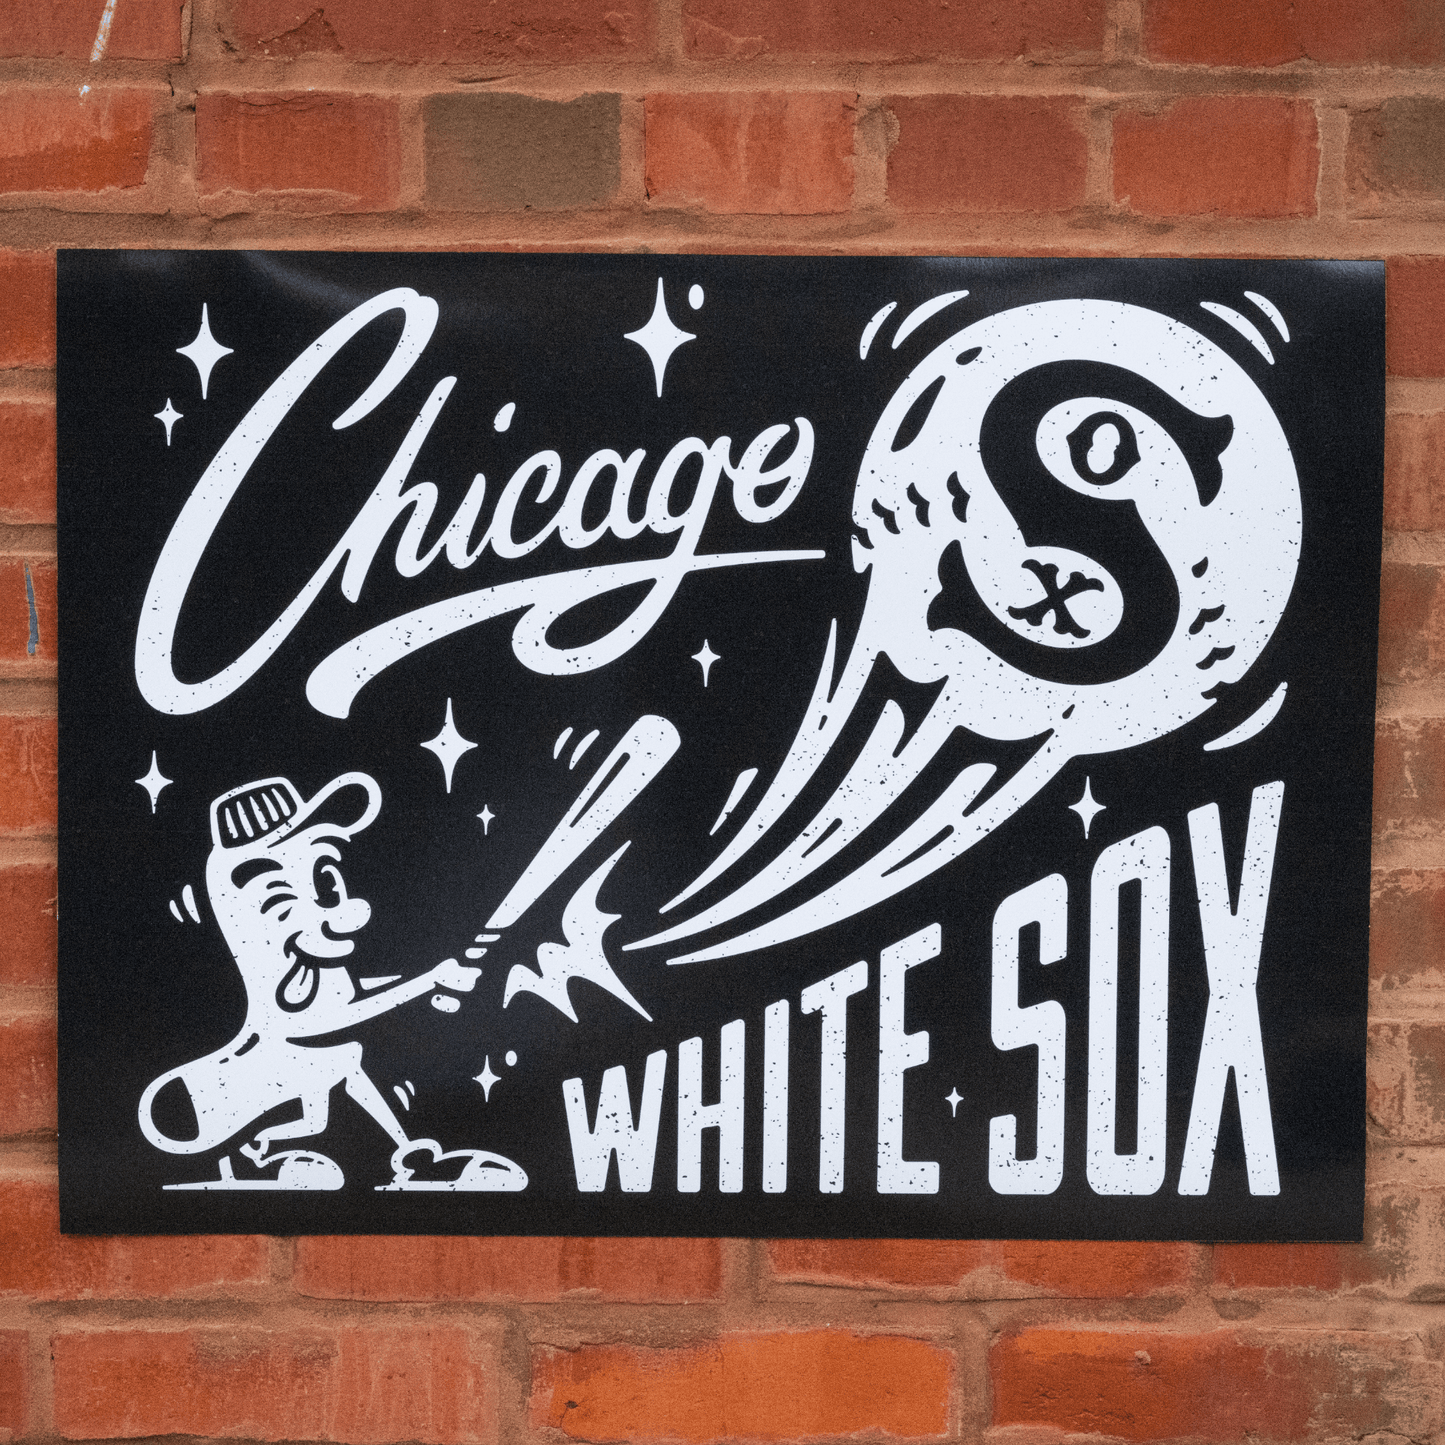 Chicago White Sox Batter Up 18" x 24" Poster